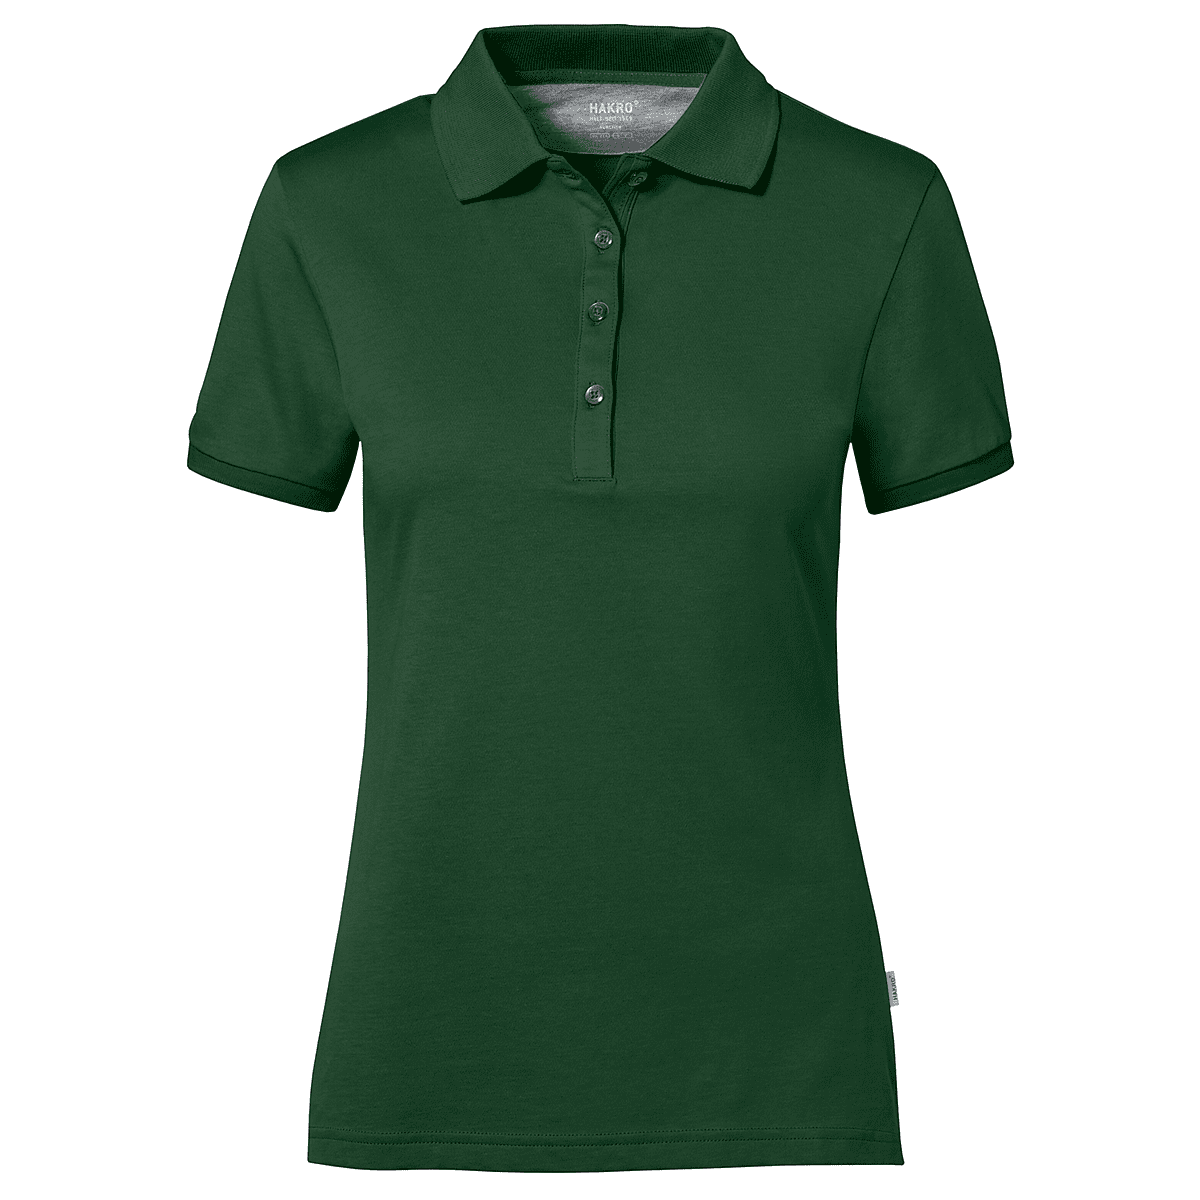 Damen Polo-Shirt Funktion grün